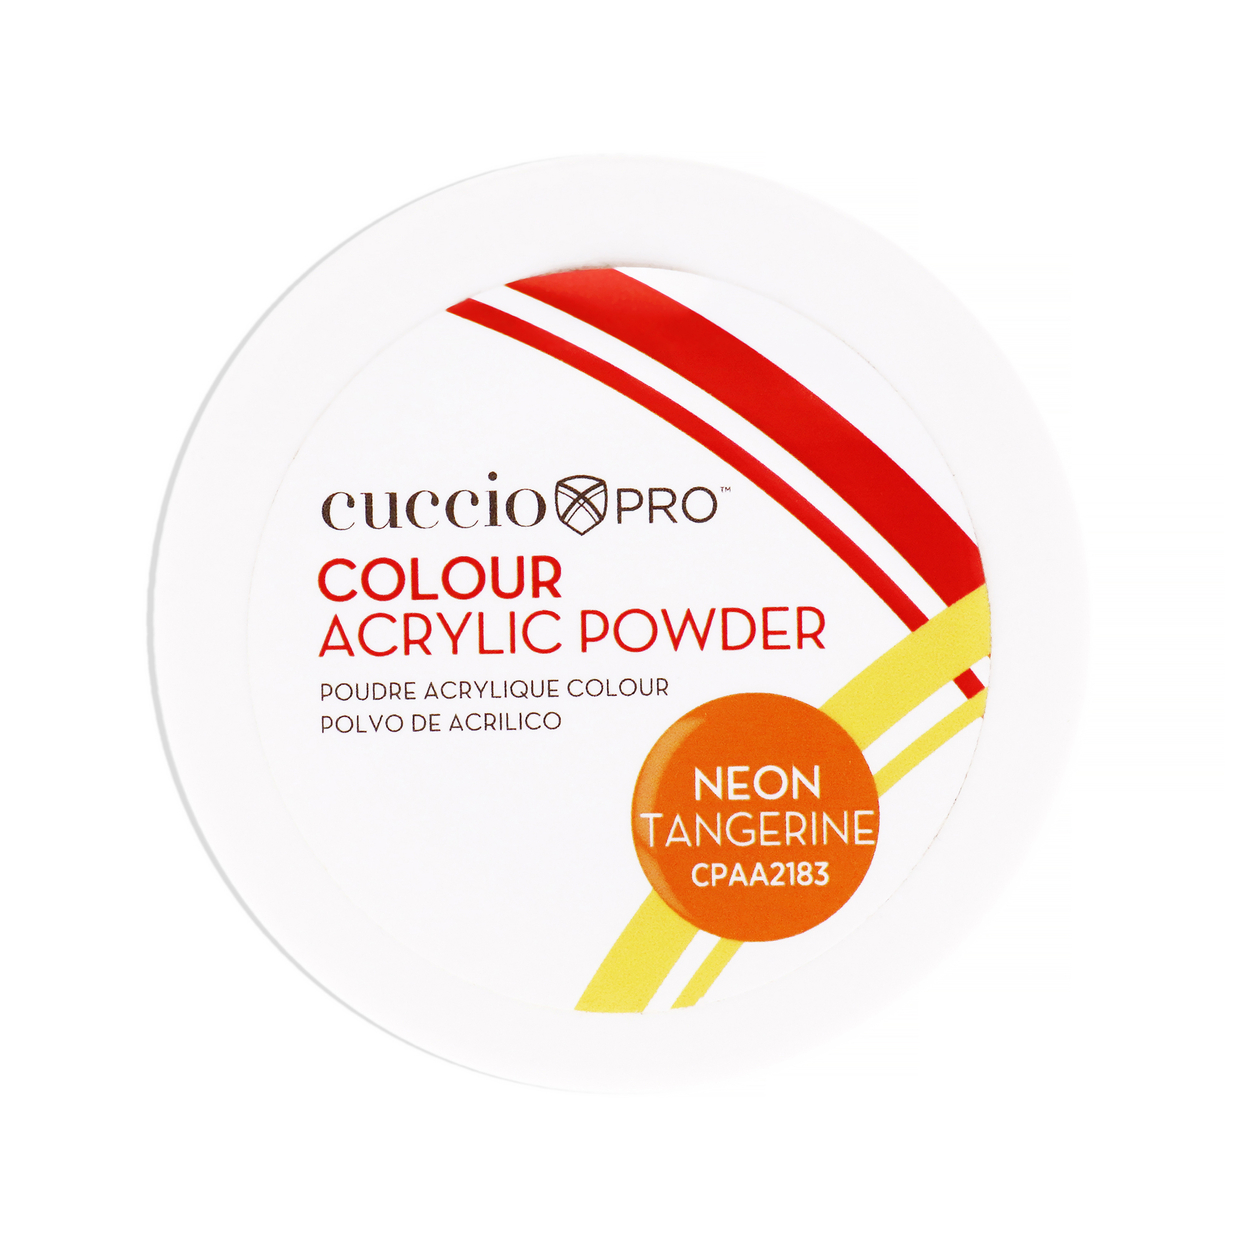 Cuccio PRO Colour Acrylic Powder - Neon Tangerine 1.6 Oz